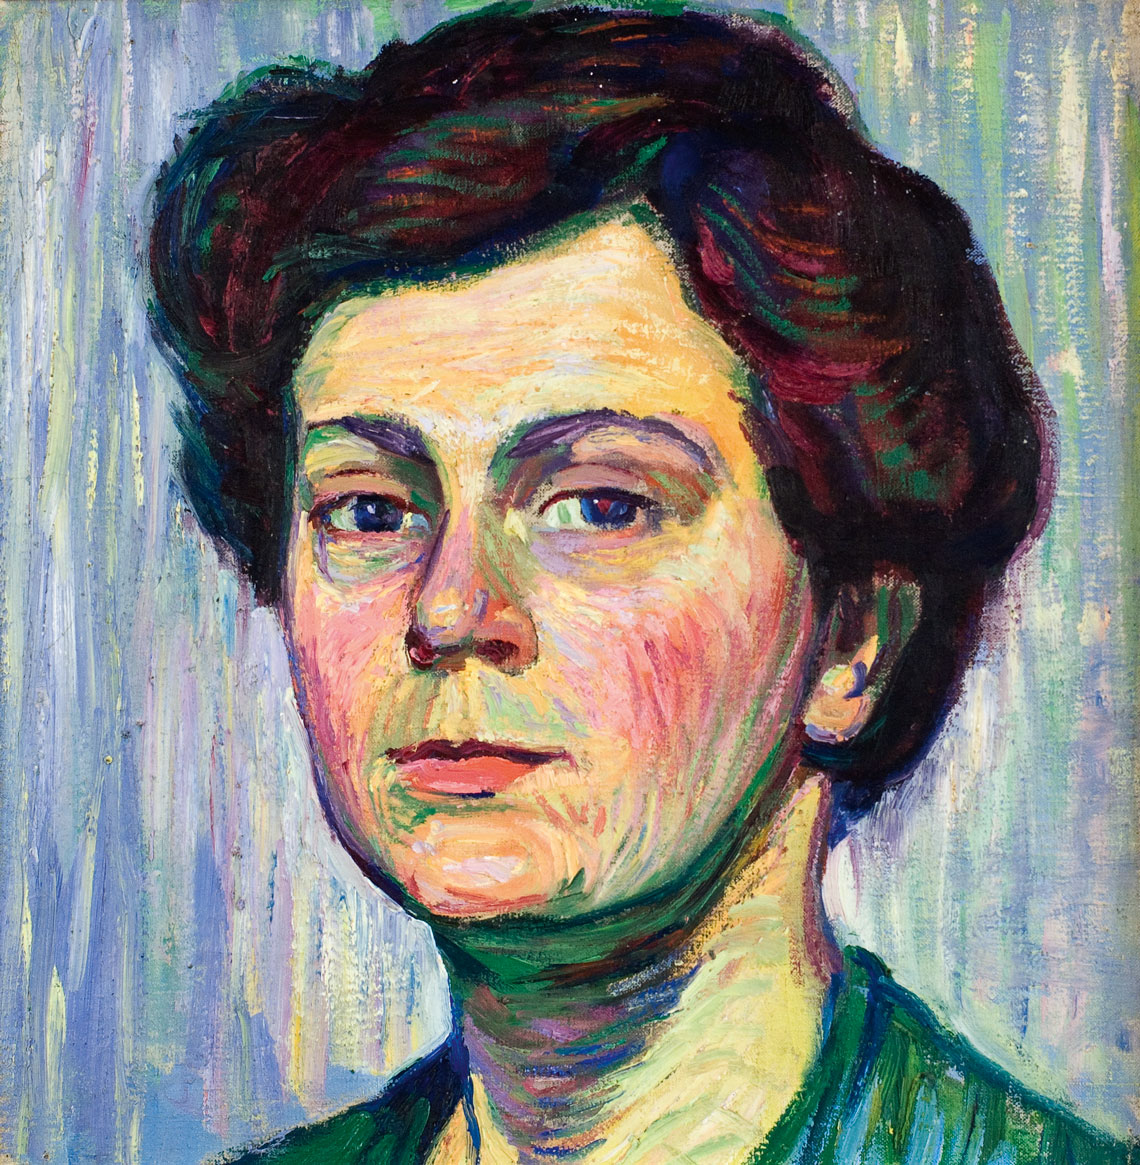 Dora Koch-Stetter | Porträt einer Frau mit rot-violetten Wangen (Selbstbildnis) | 1913 | Öl auf Leinwand | 34 x 34 cm | Sammlung der Gemeinde Ahrenshoop/Förderkreis Ahrenshoop e.V. im Kunstmuseum Ahrenshoop